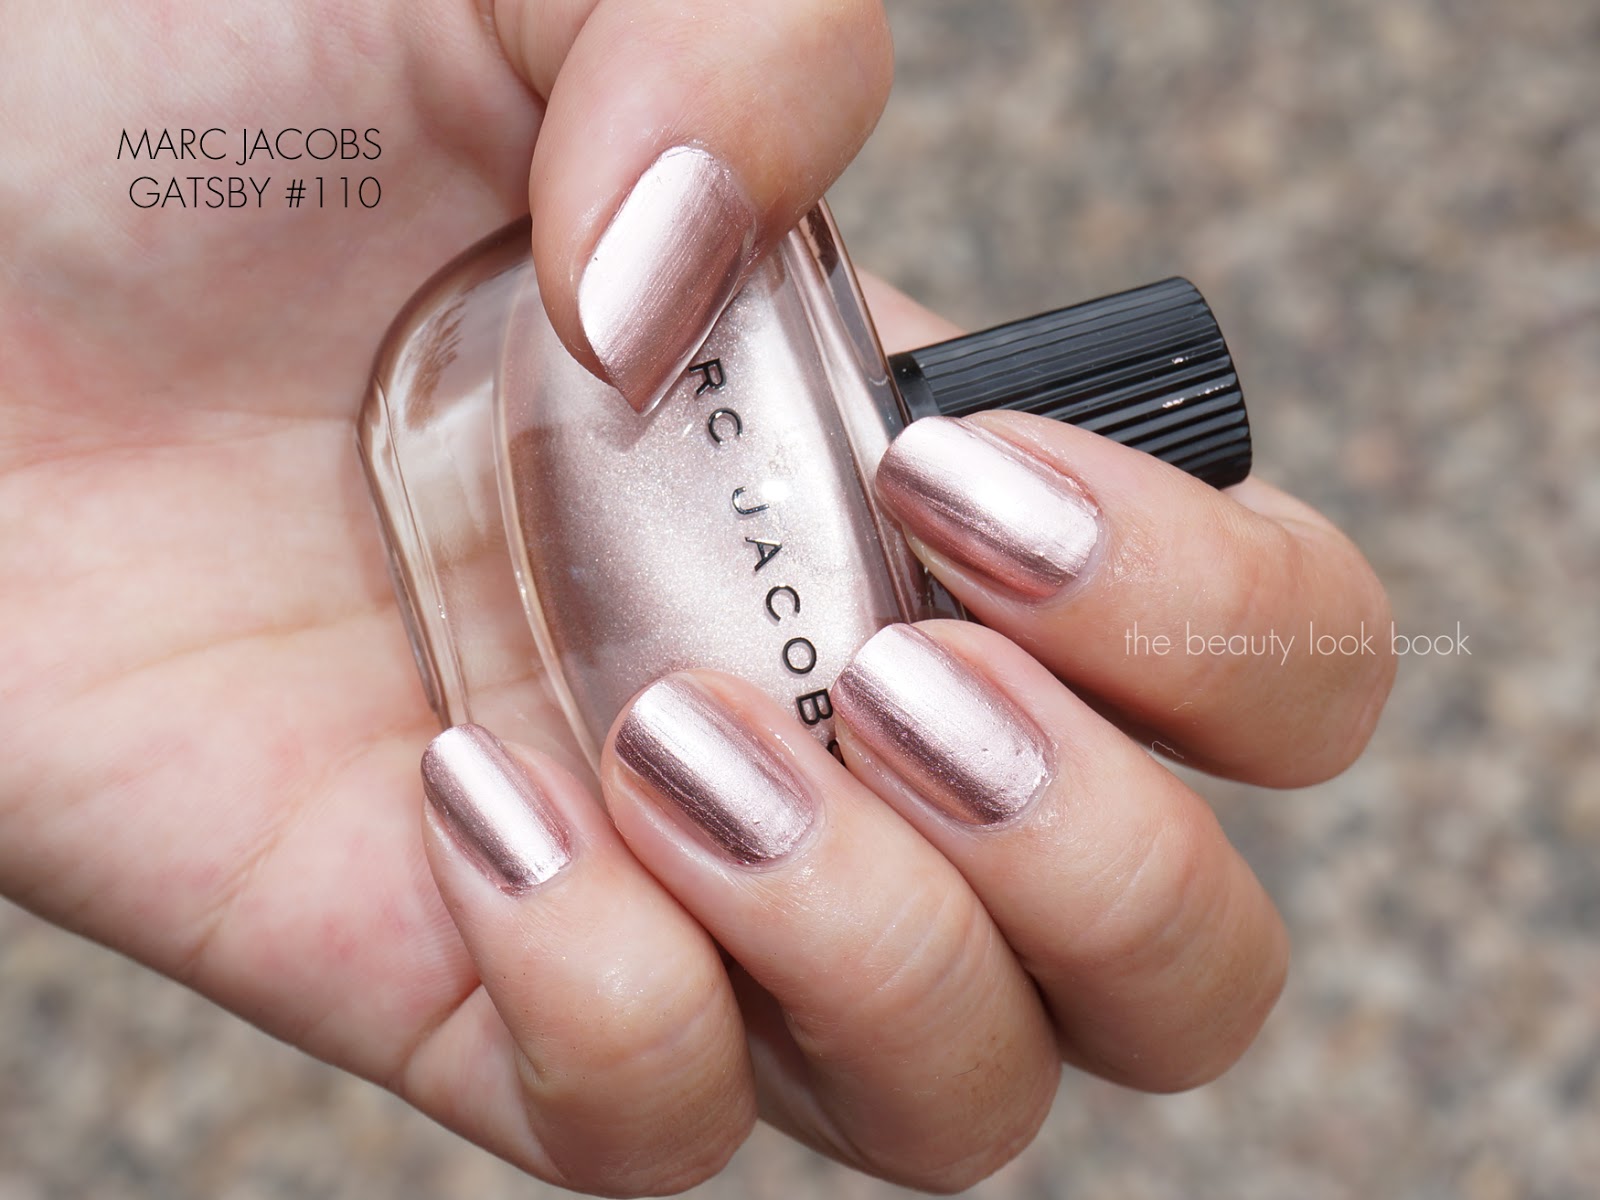 2. Marc Jacobs Beauty Enamored Hi-Shine Nail Polish in "Gatsby" - wide 6